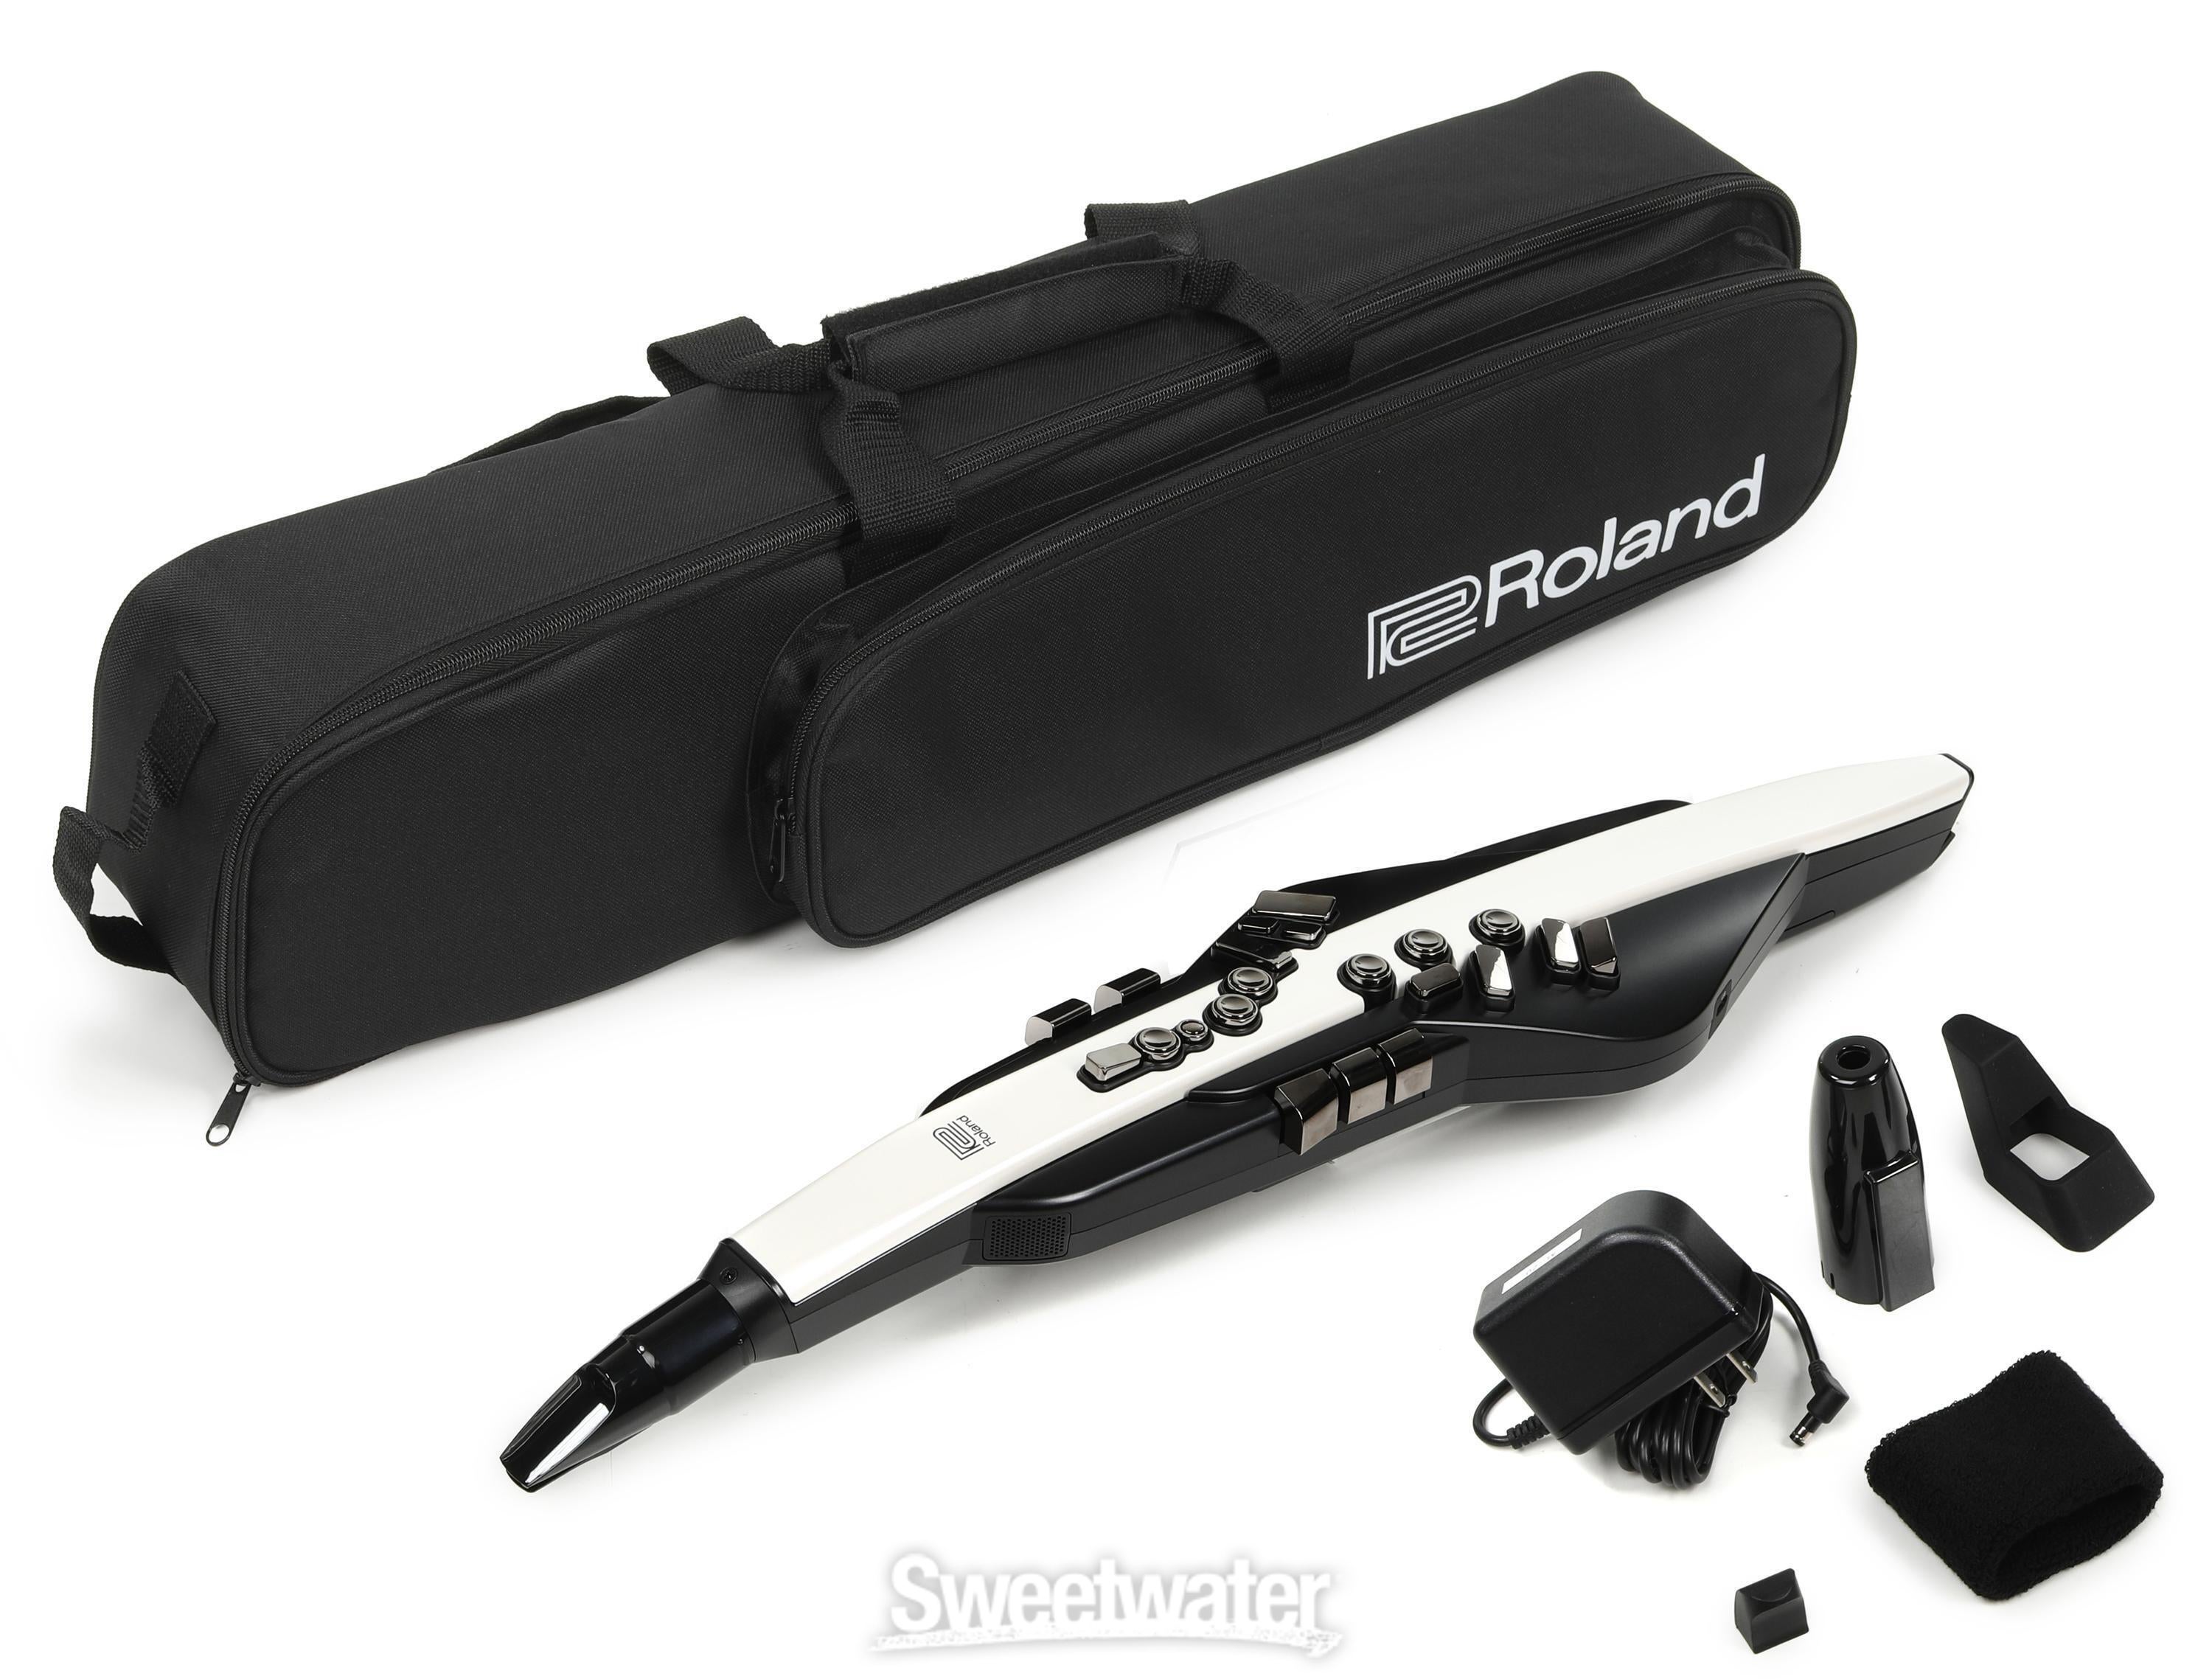 Roland Aerophone AE-20 Digital Wind Instrument | Sweetwater